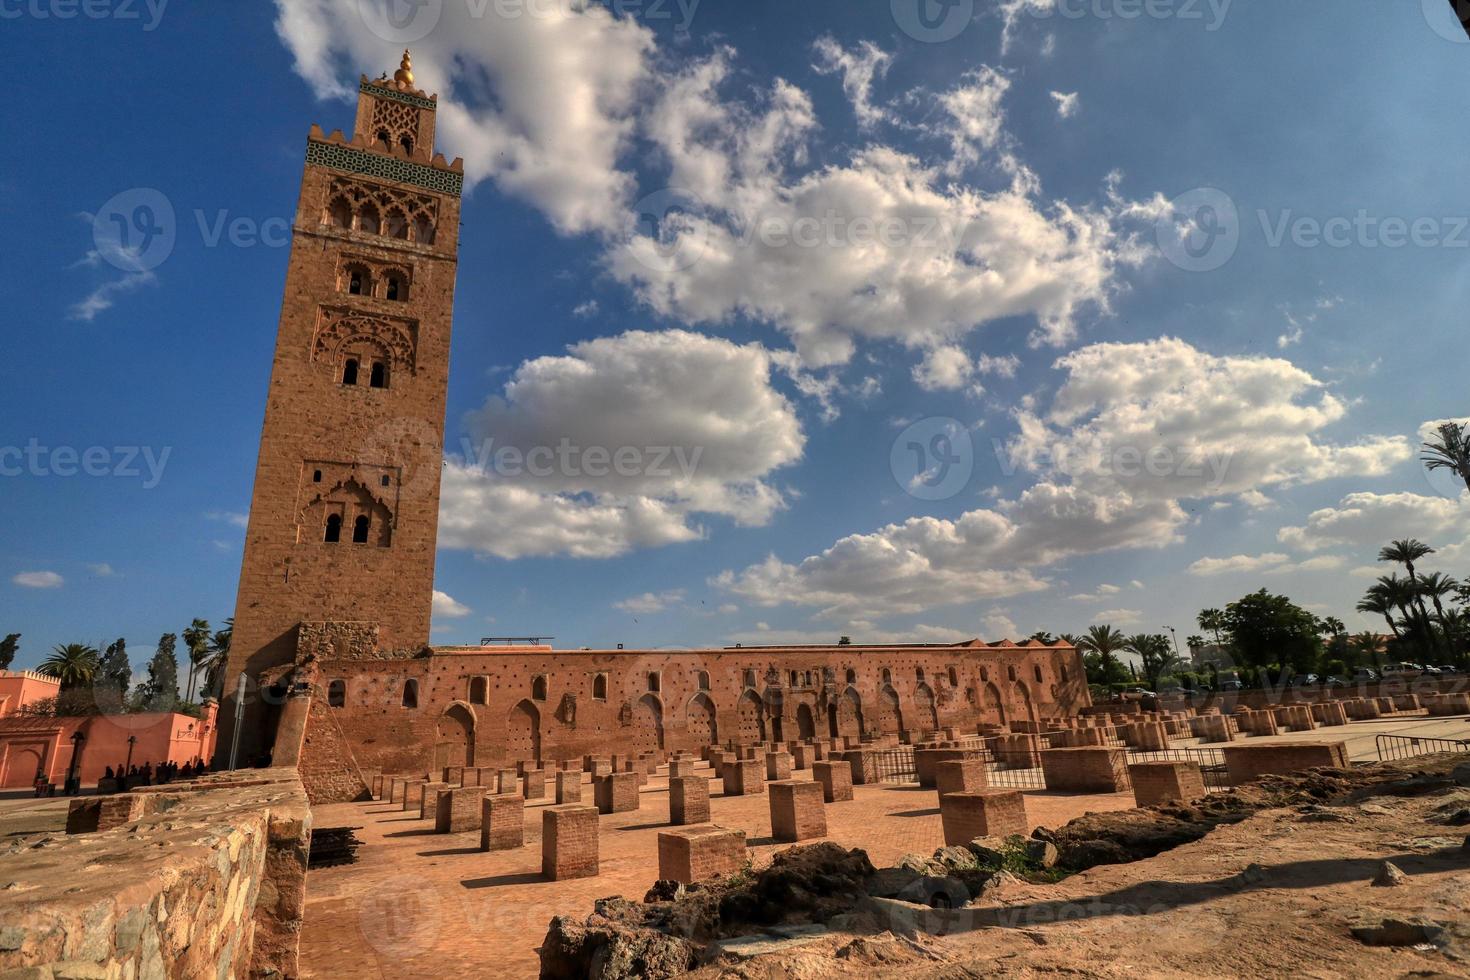 Views from around Morocco photo